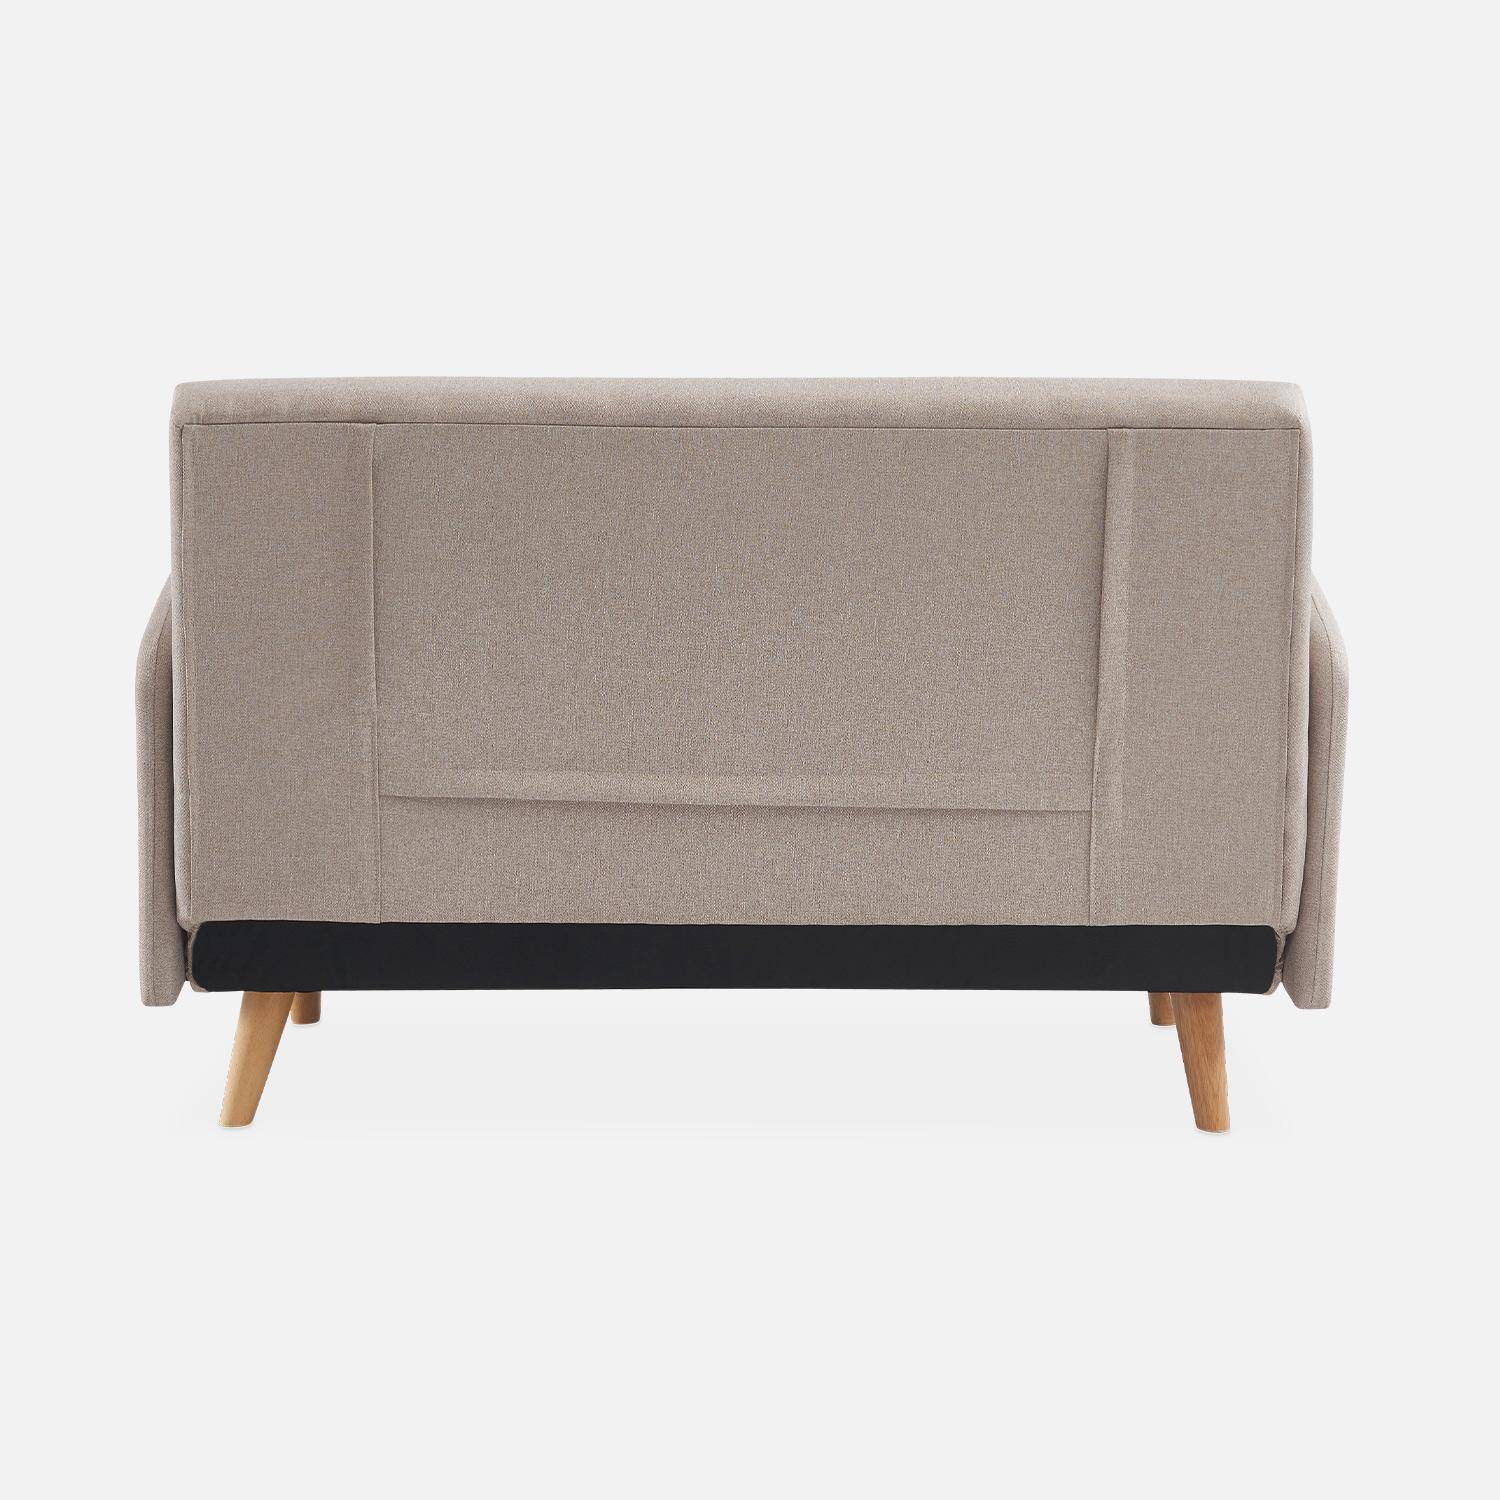  Nigwedete Sofá de dos plazas moderno de 60 pulgadas de ancho,  sofá de tela de cachemira con 2 cojines, sofá tapizado con pies de metal  dorado, sala de estar pequeña y